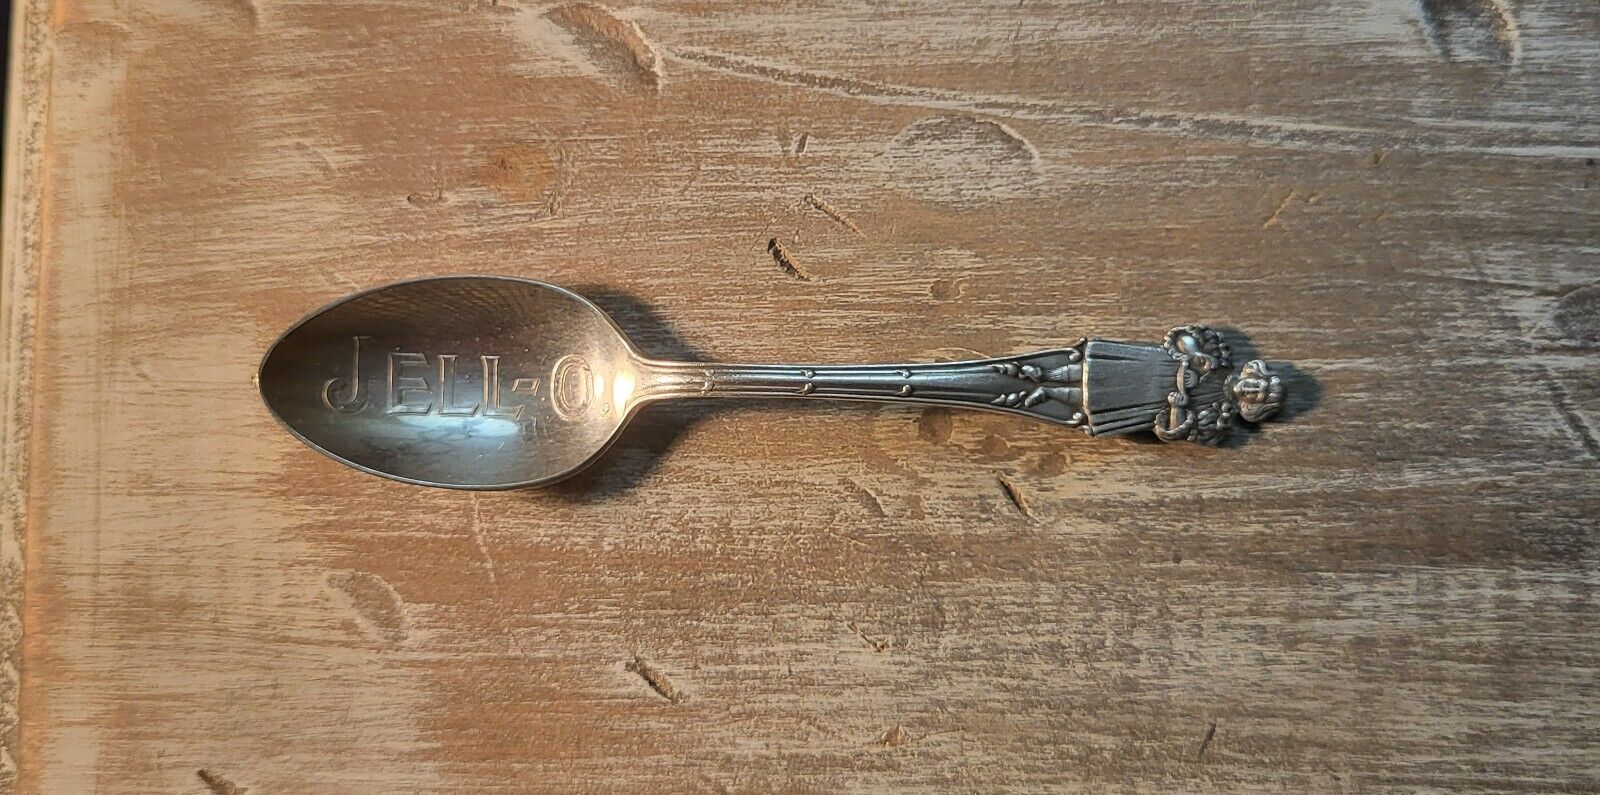 Antique 1900 Jell-O Advertising Souvenir Spoon Silverplate Gelatin Dessert Snack